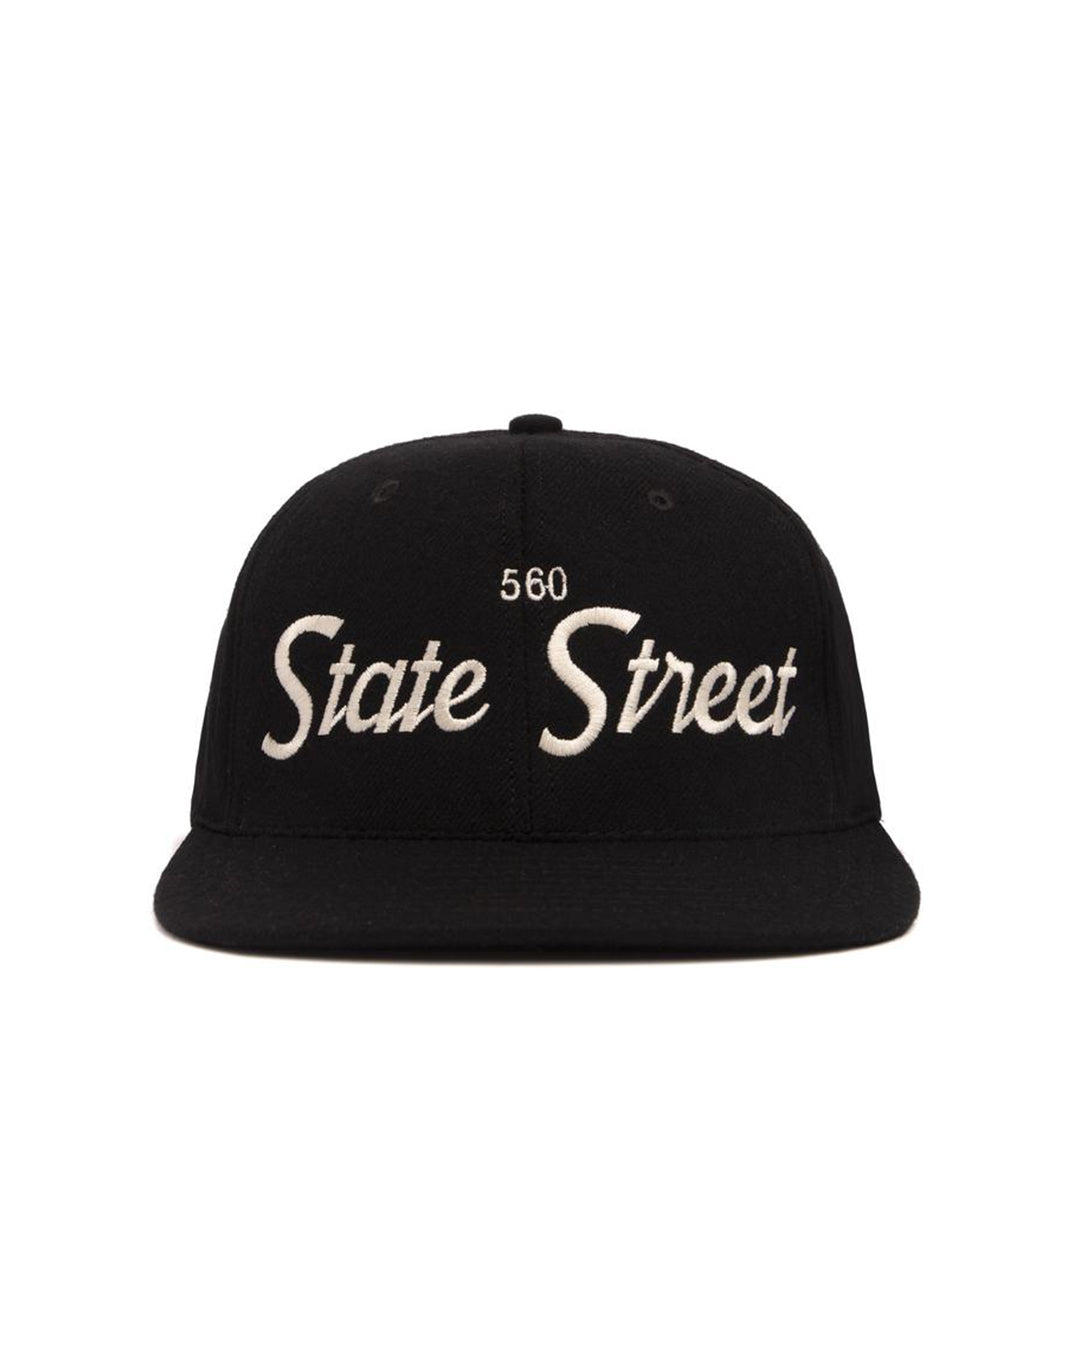 HOOD HAT / 560 STATE STREET (BLACK / IVORY)